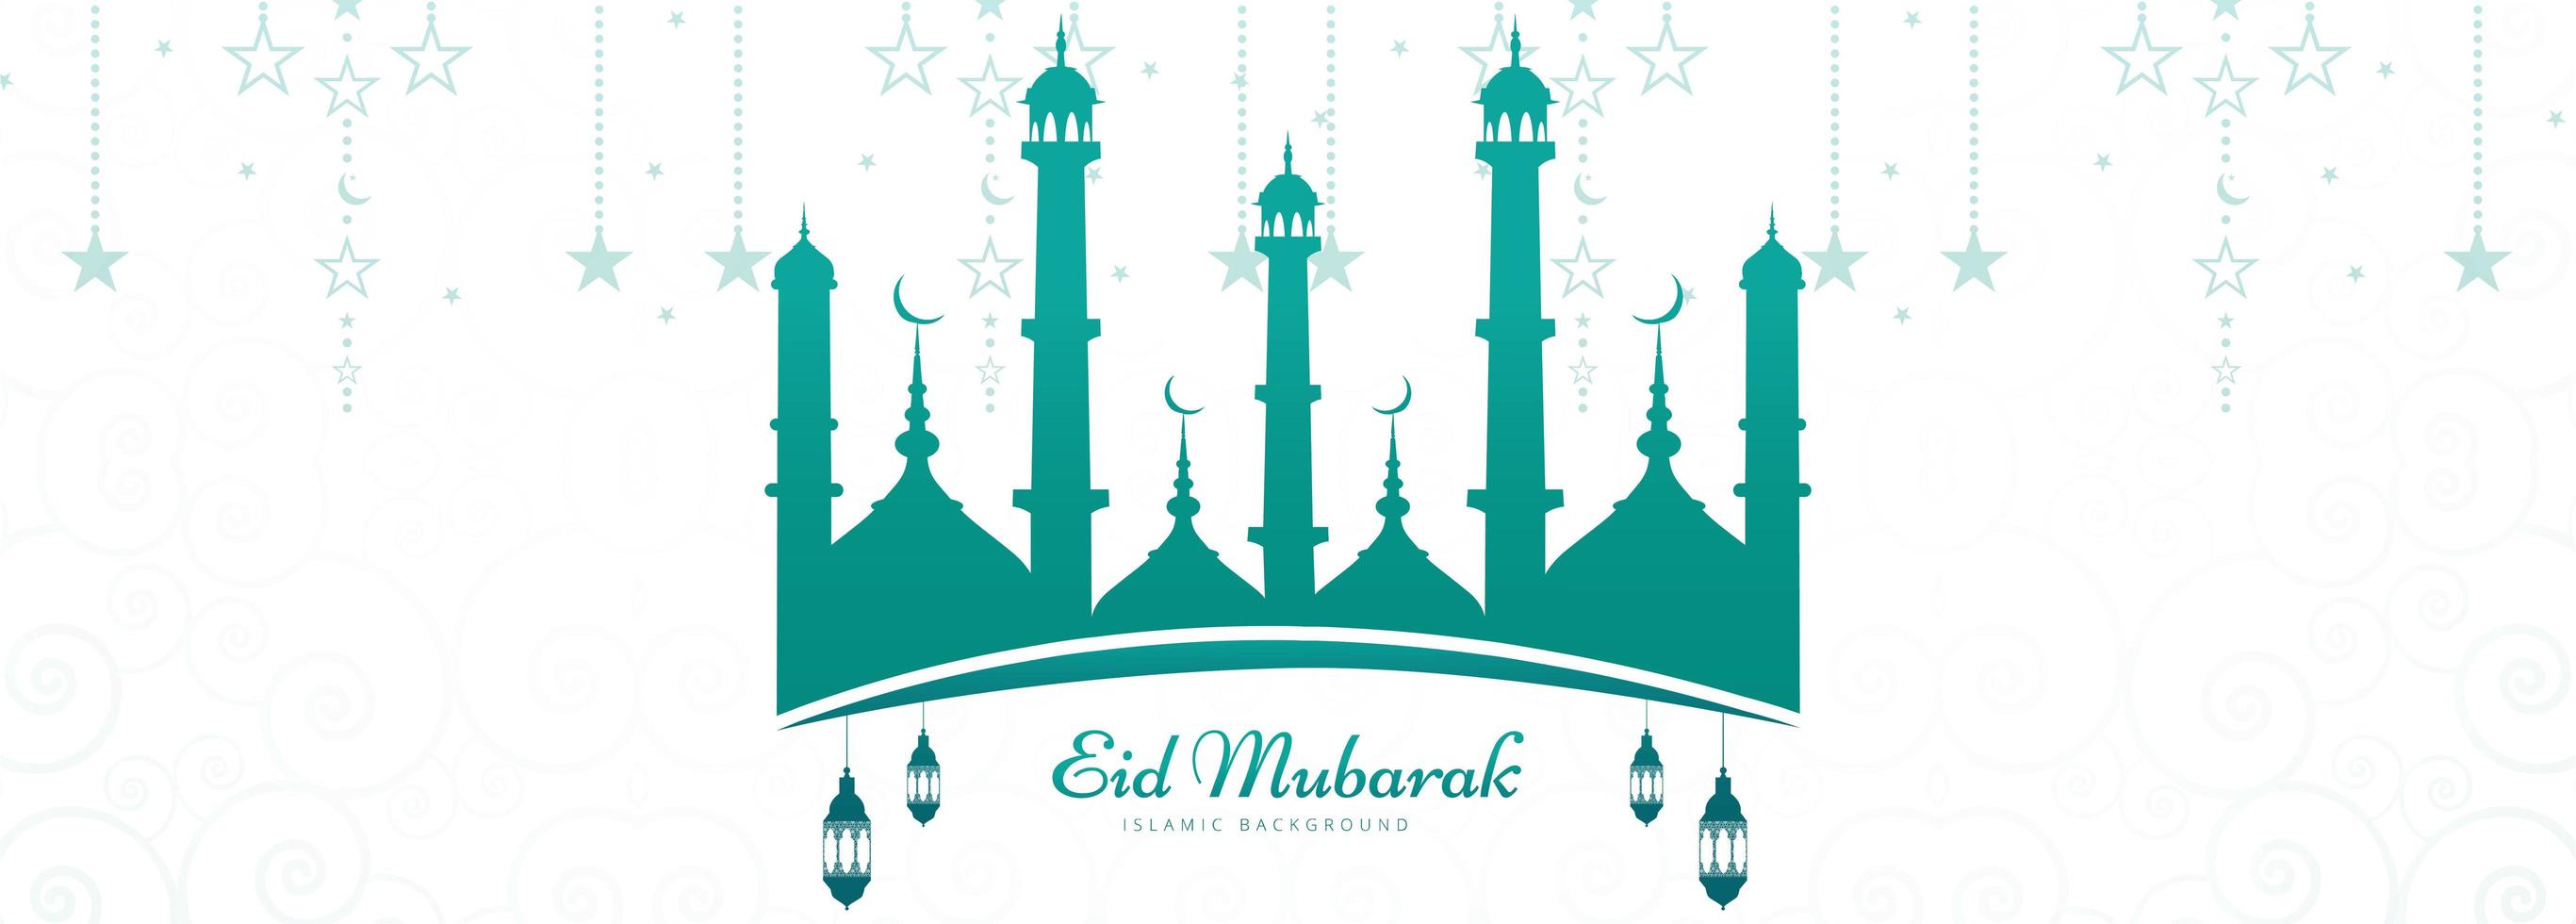 striscione di carta eid mubarak con moschea verde acqua vettore